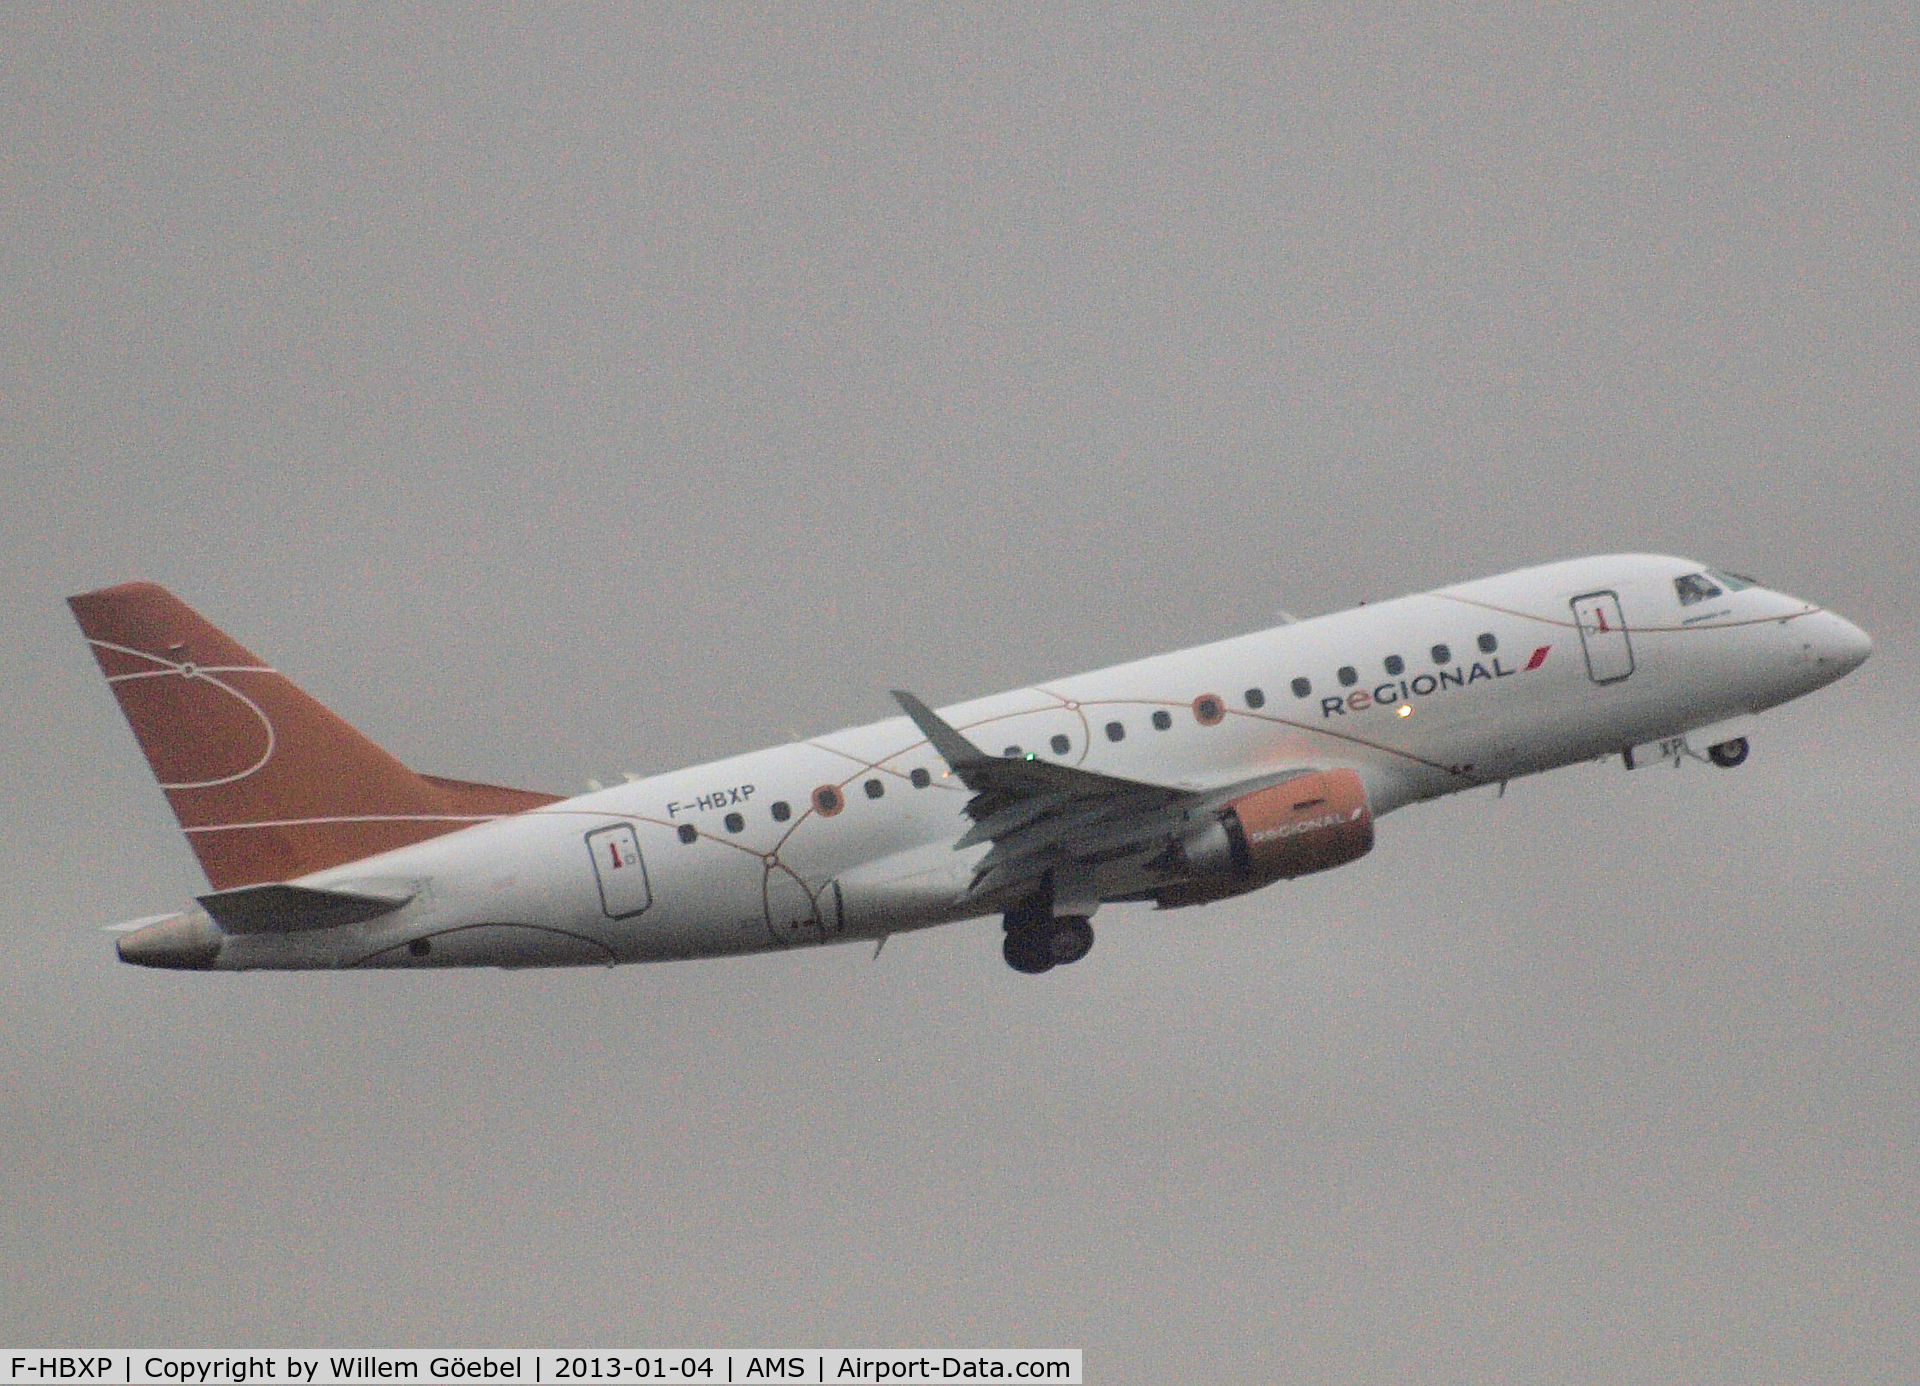 F-HBXP, 2004 Embraer 170LR (ERJ-170-100LR) C/N 17000036, Take off from runway L18 of Amsterdam Airport 